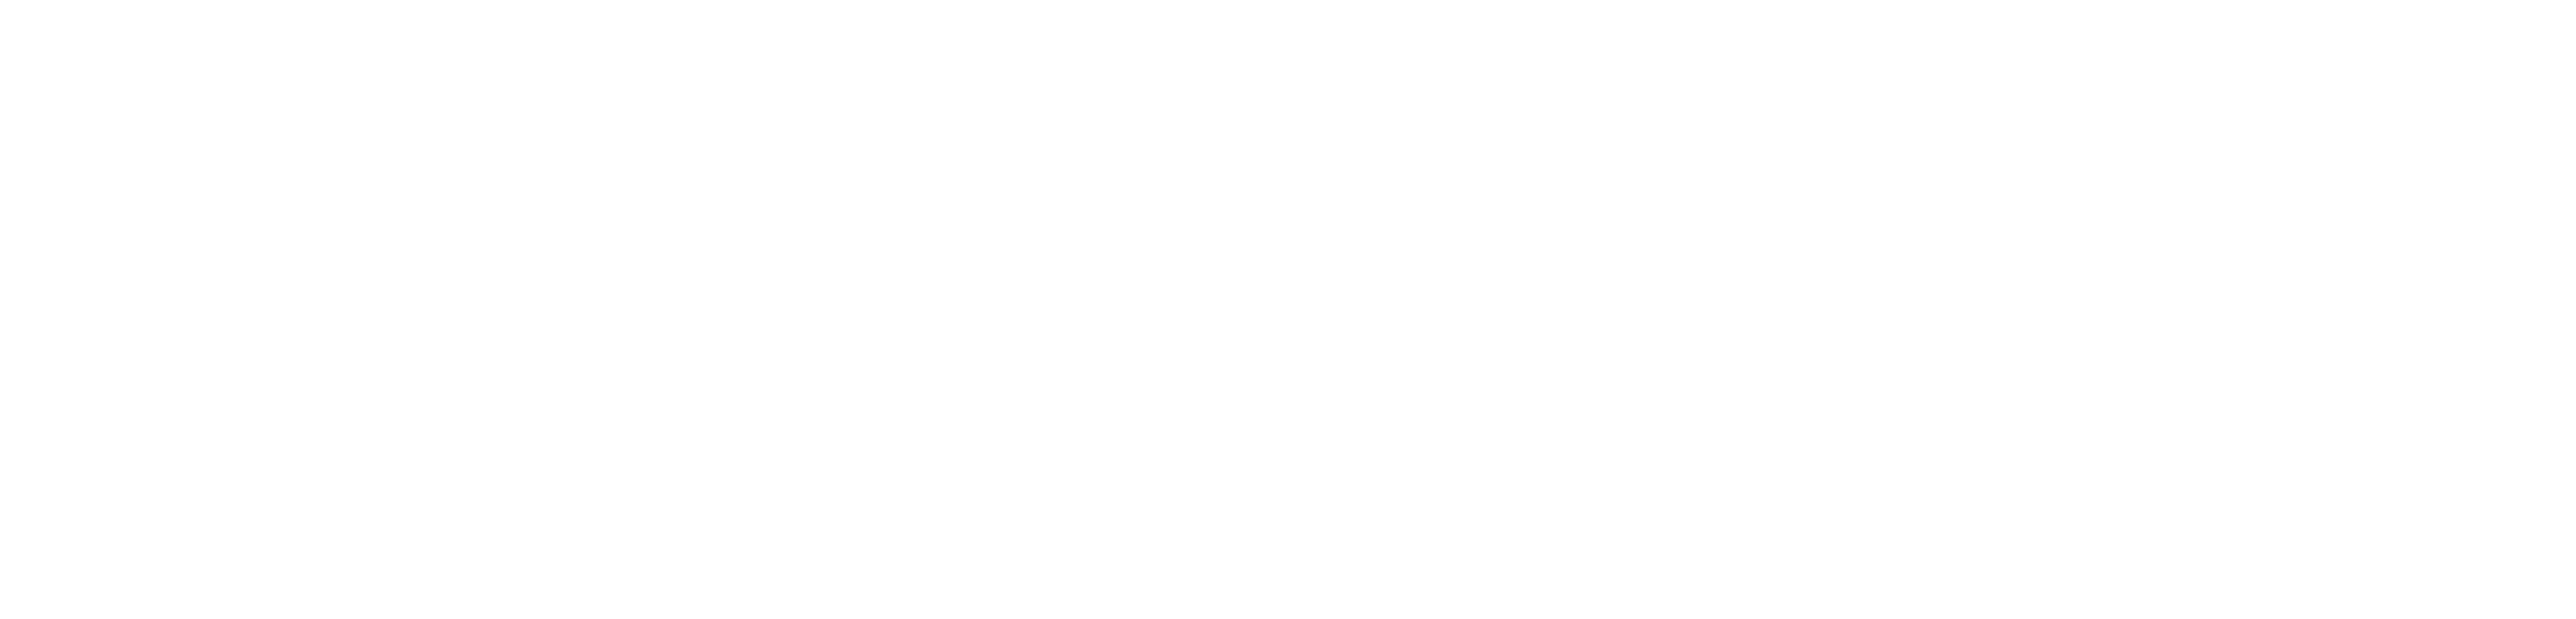 468 Capital logo